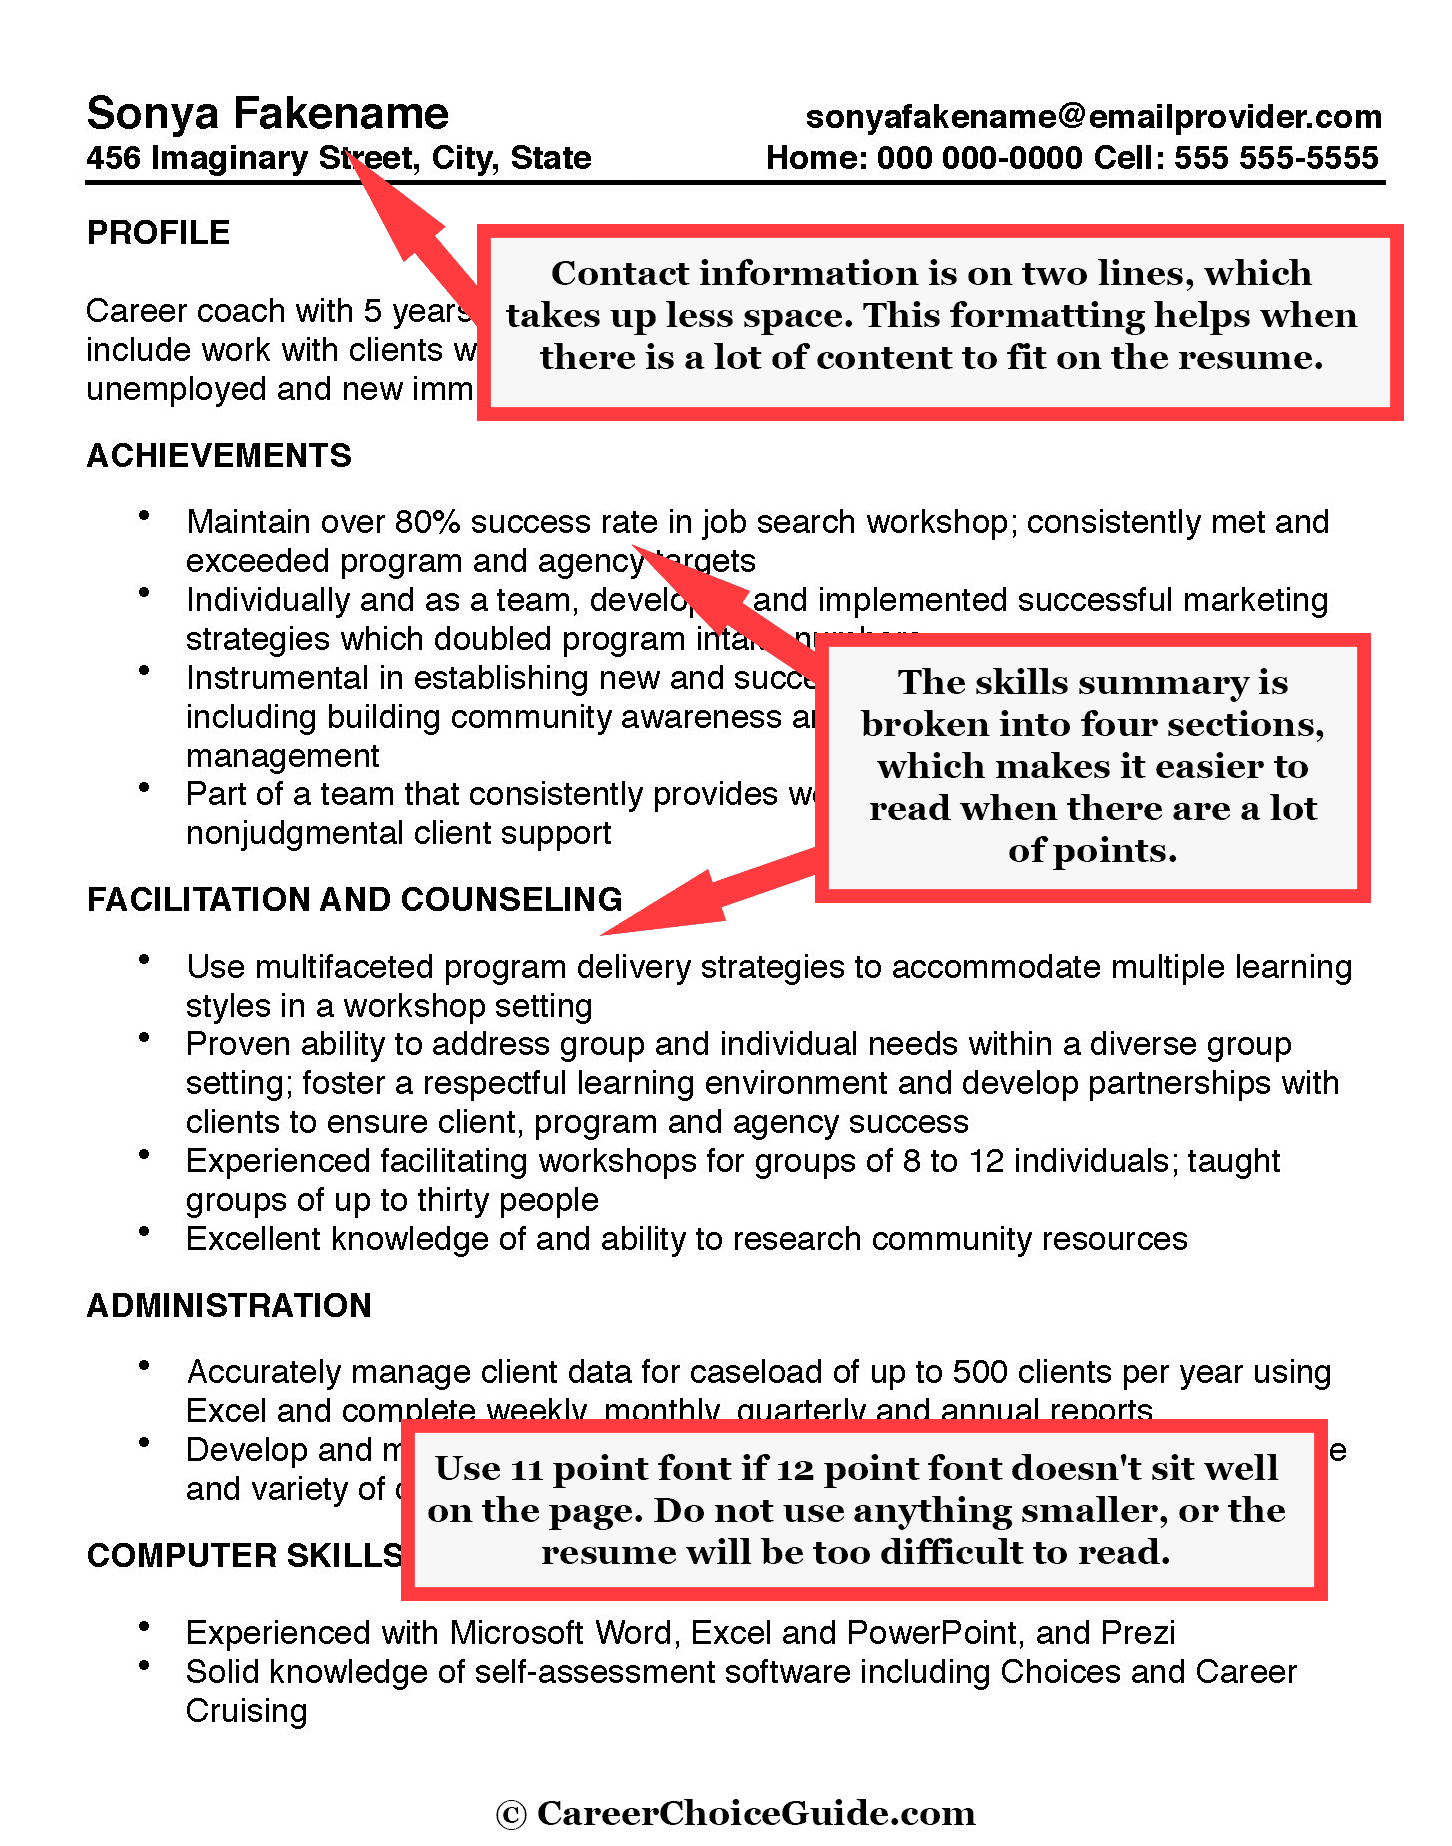 Sample Career Counselor Resume